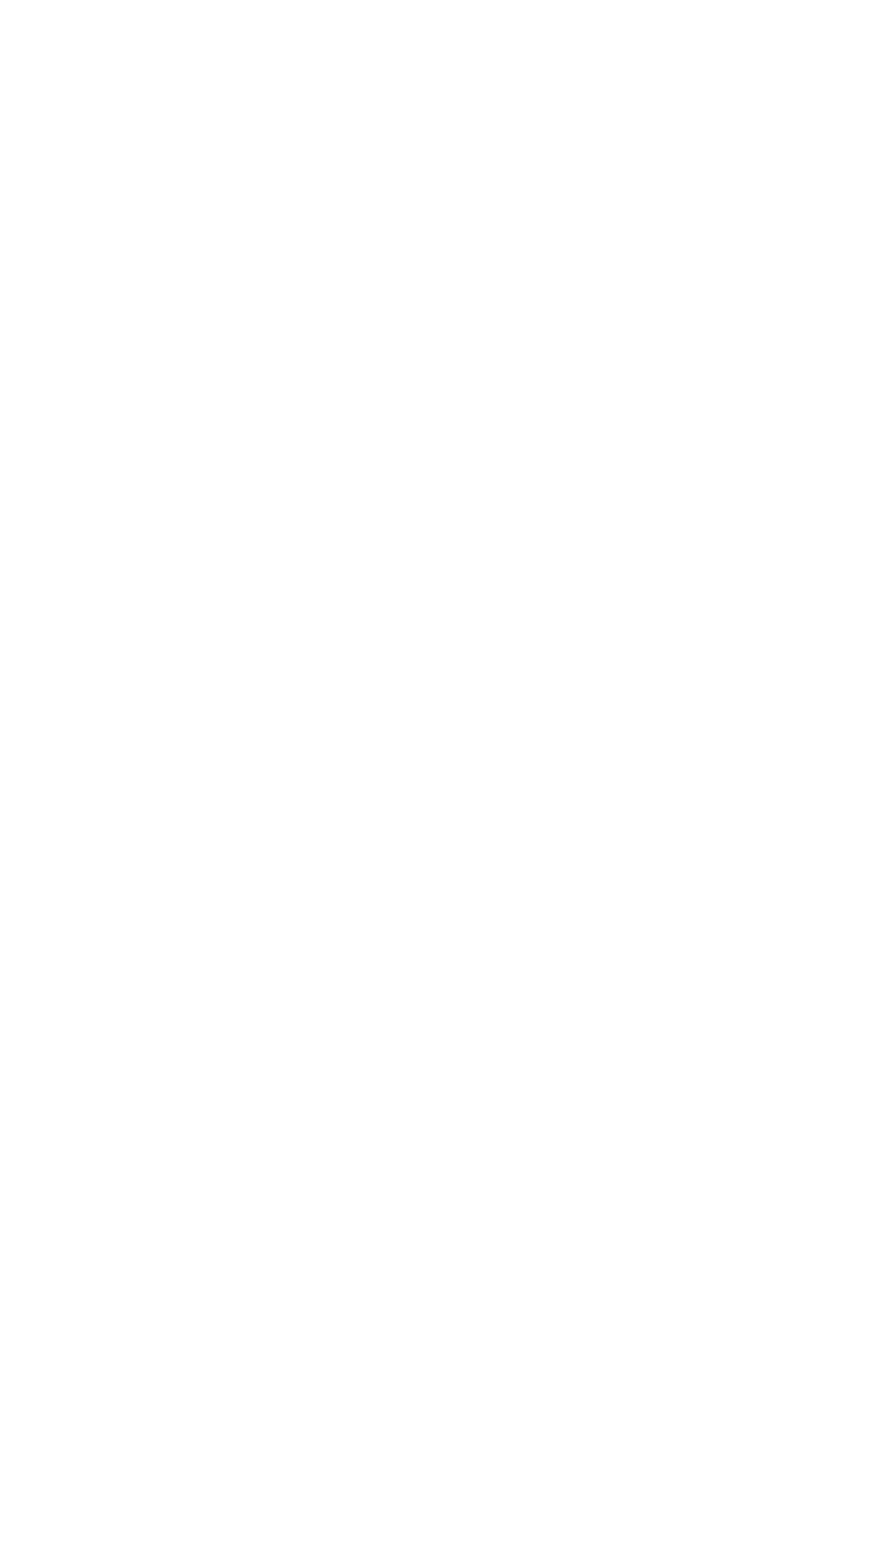 Roivant Sciences logo for dark backgrounds (transparent PNG)